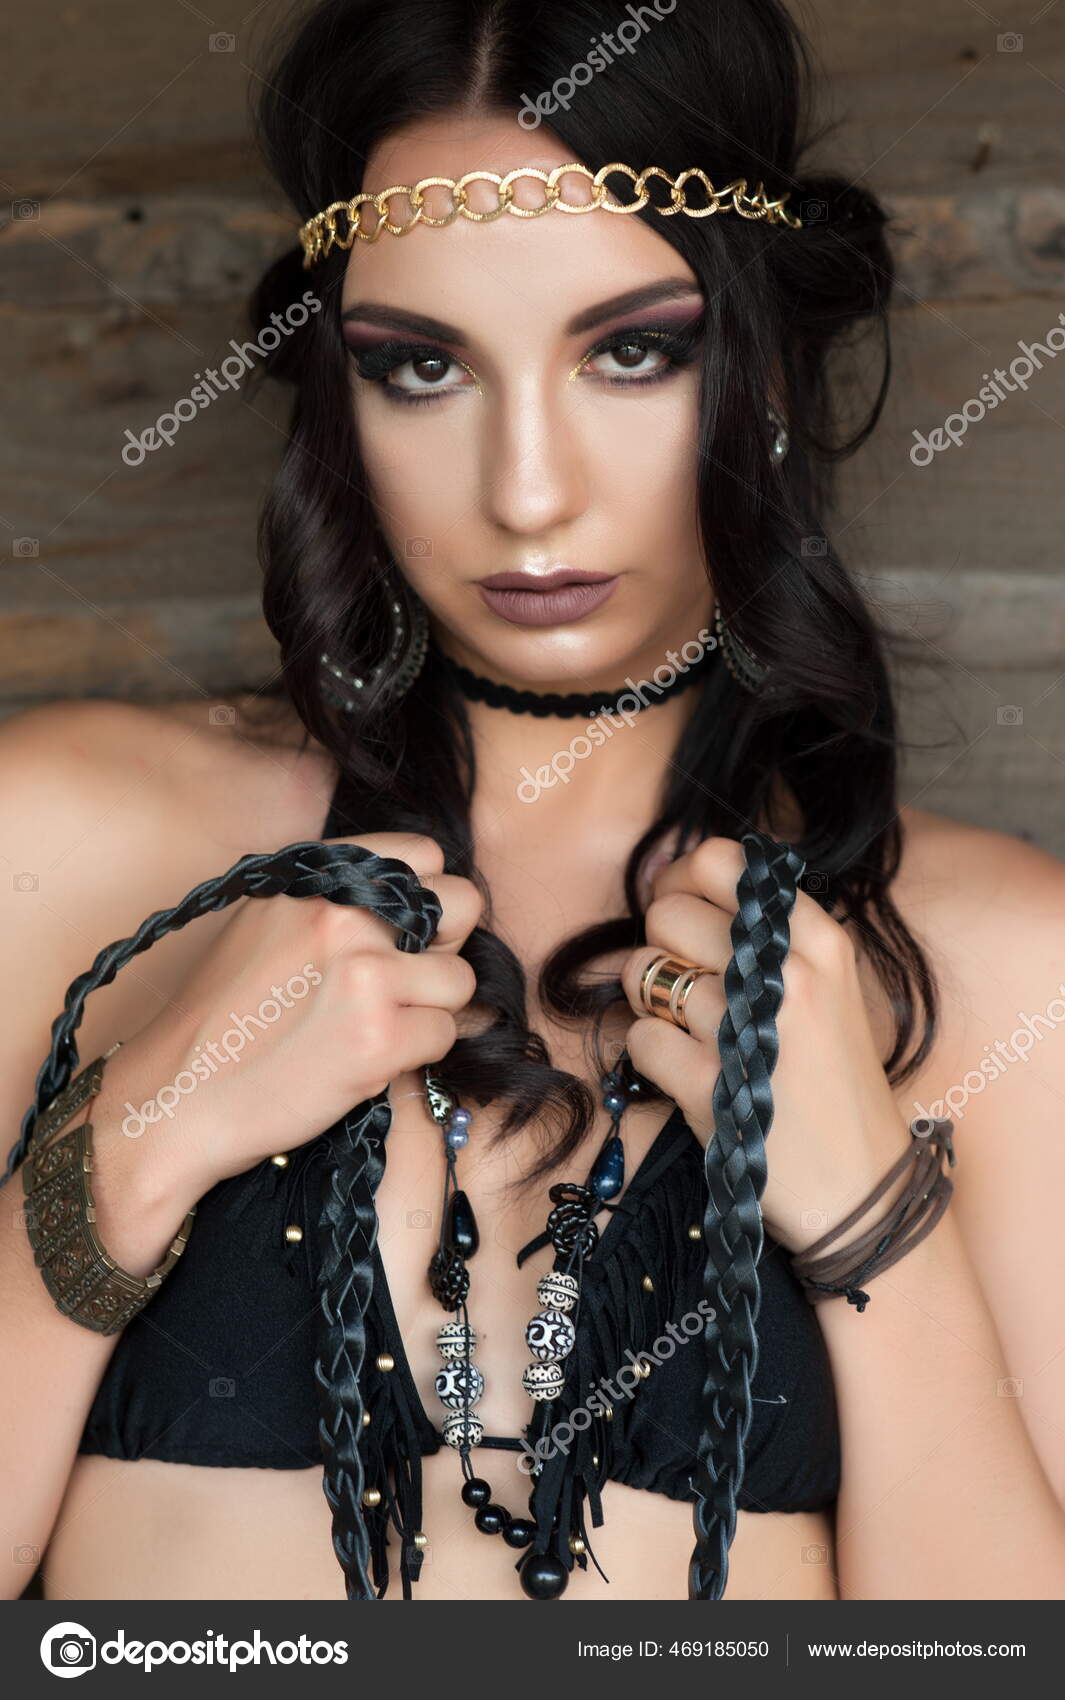 https://st2.depositphotos.com/1012146/46918/i/1600/depositphotos_469185050-stock-photo-beautiful-sexy-brunette-girl-dressed.jpg